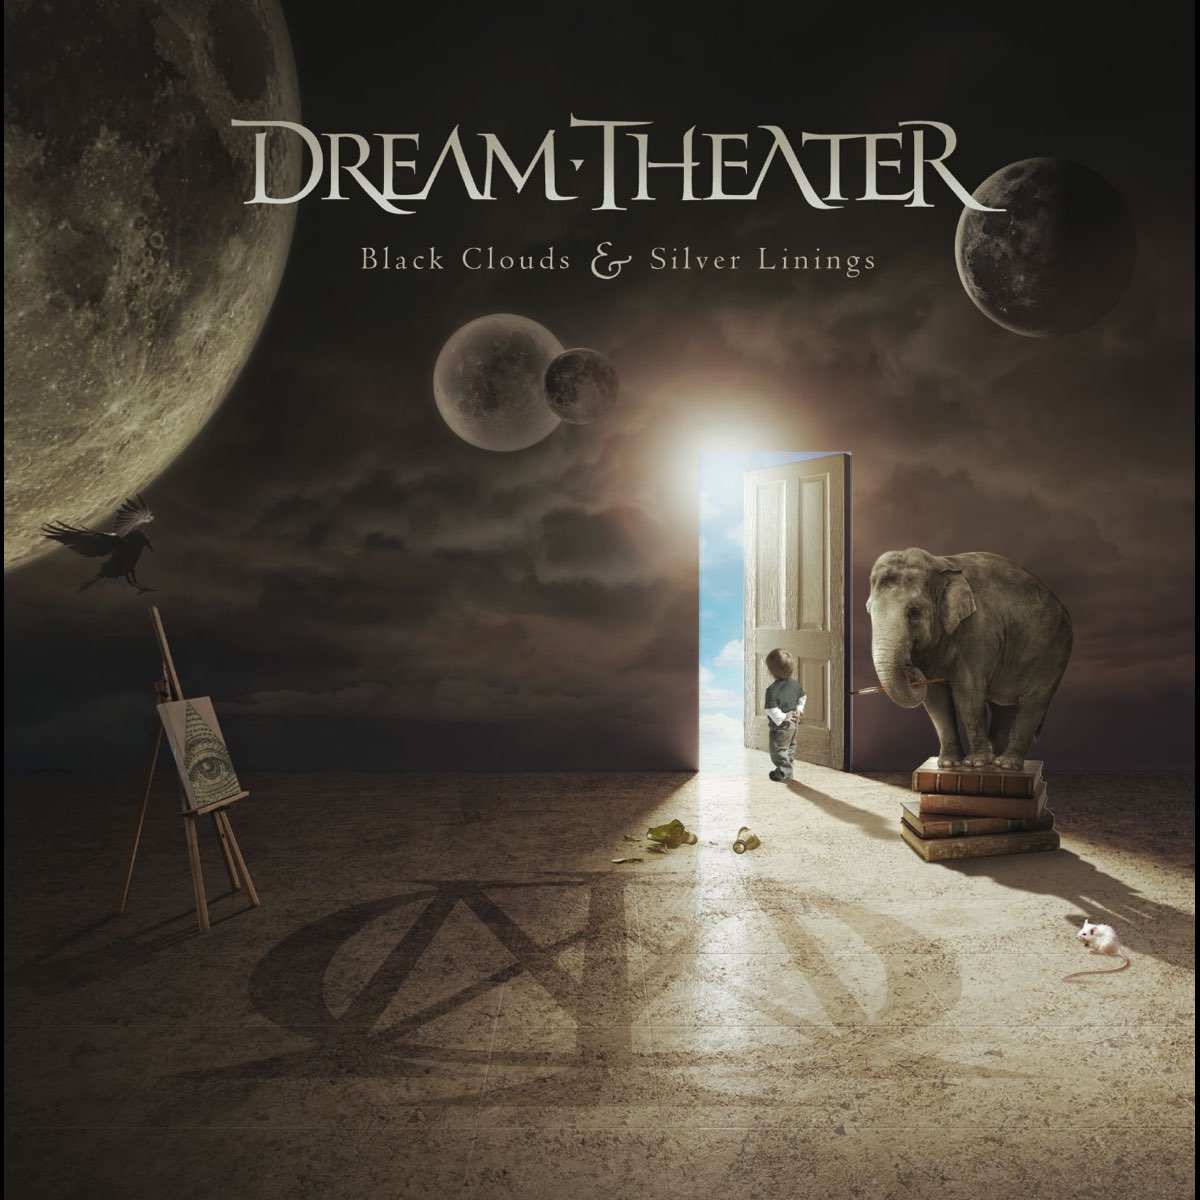 ‎Black Clouds & Silver Linings de Dream Theater no Apple Music